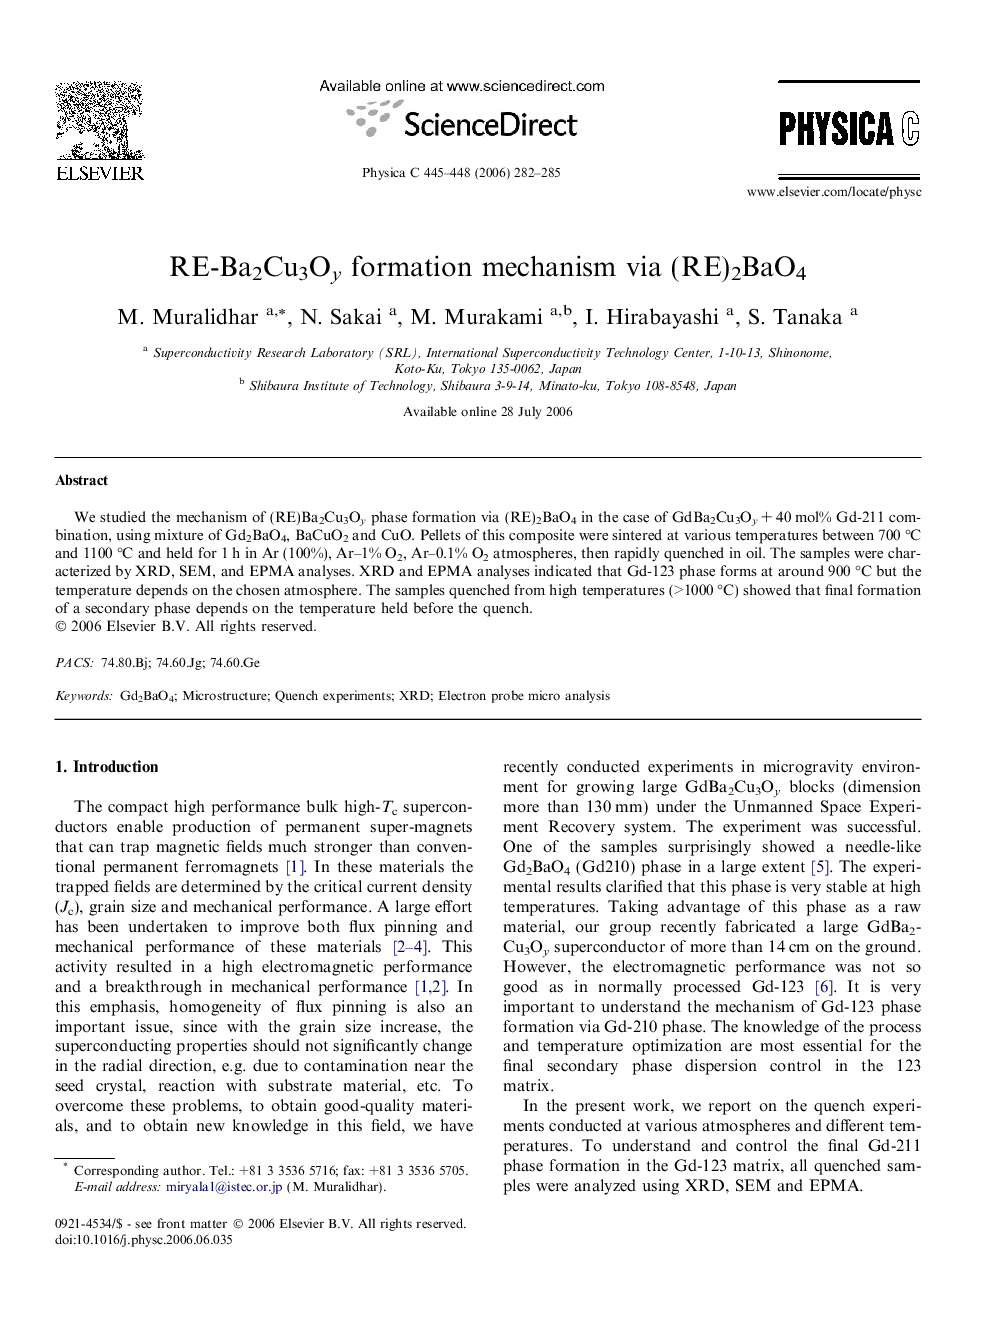 RE-Ba2Cu3Oy formation mechanism via (RE)2BaO4